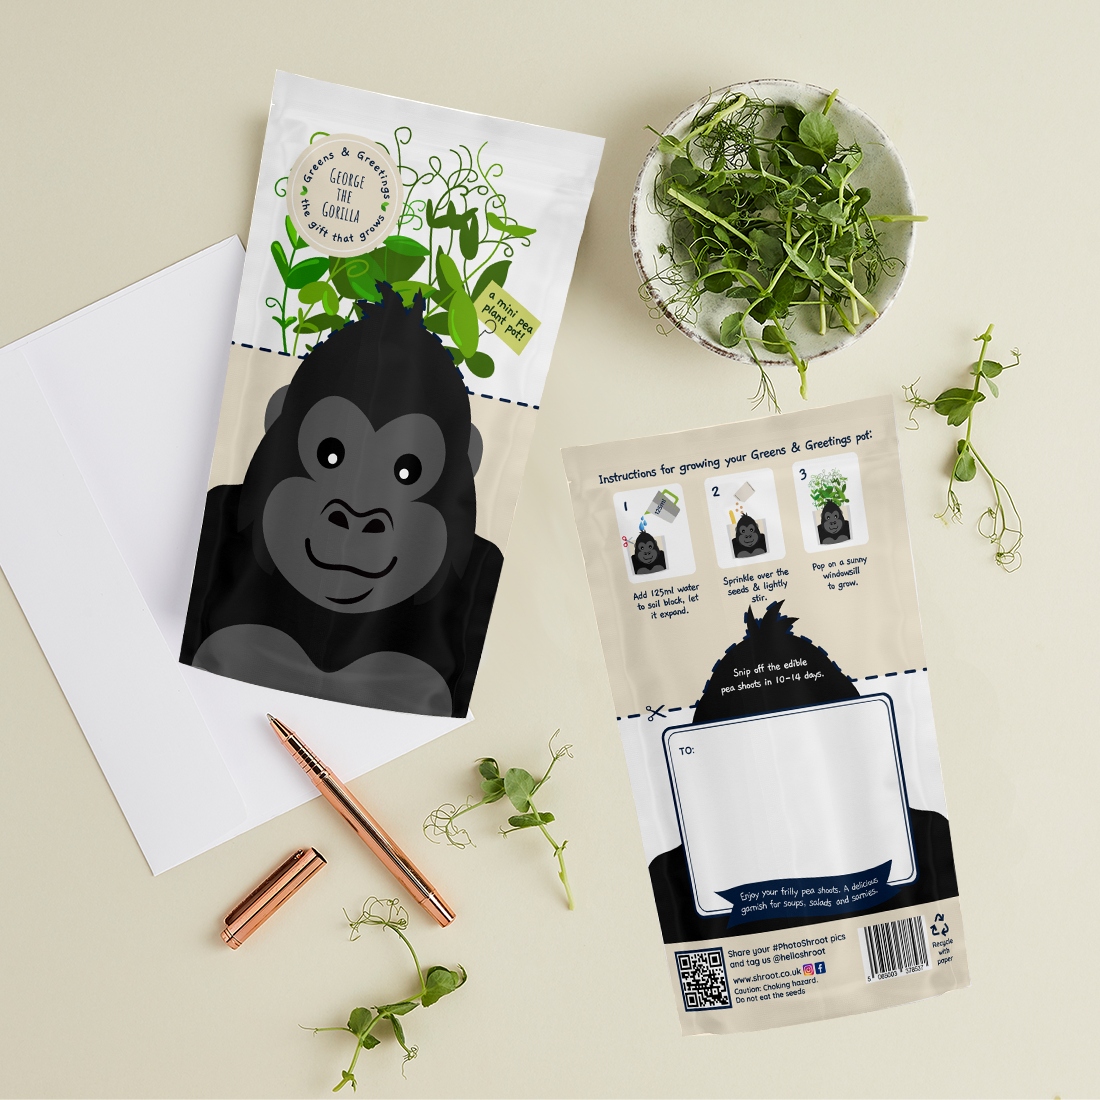 Greens & Greetings: 'George' Gorilla